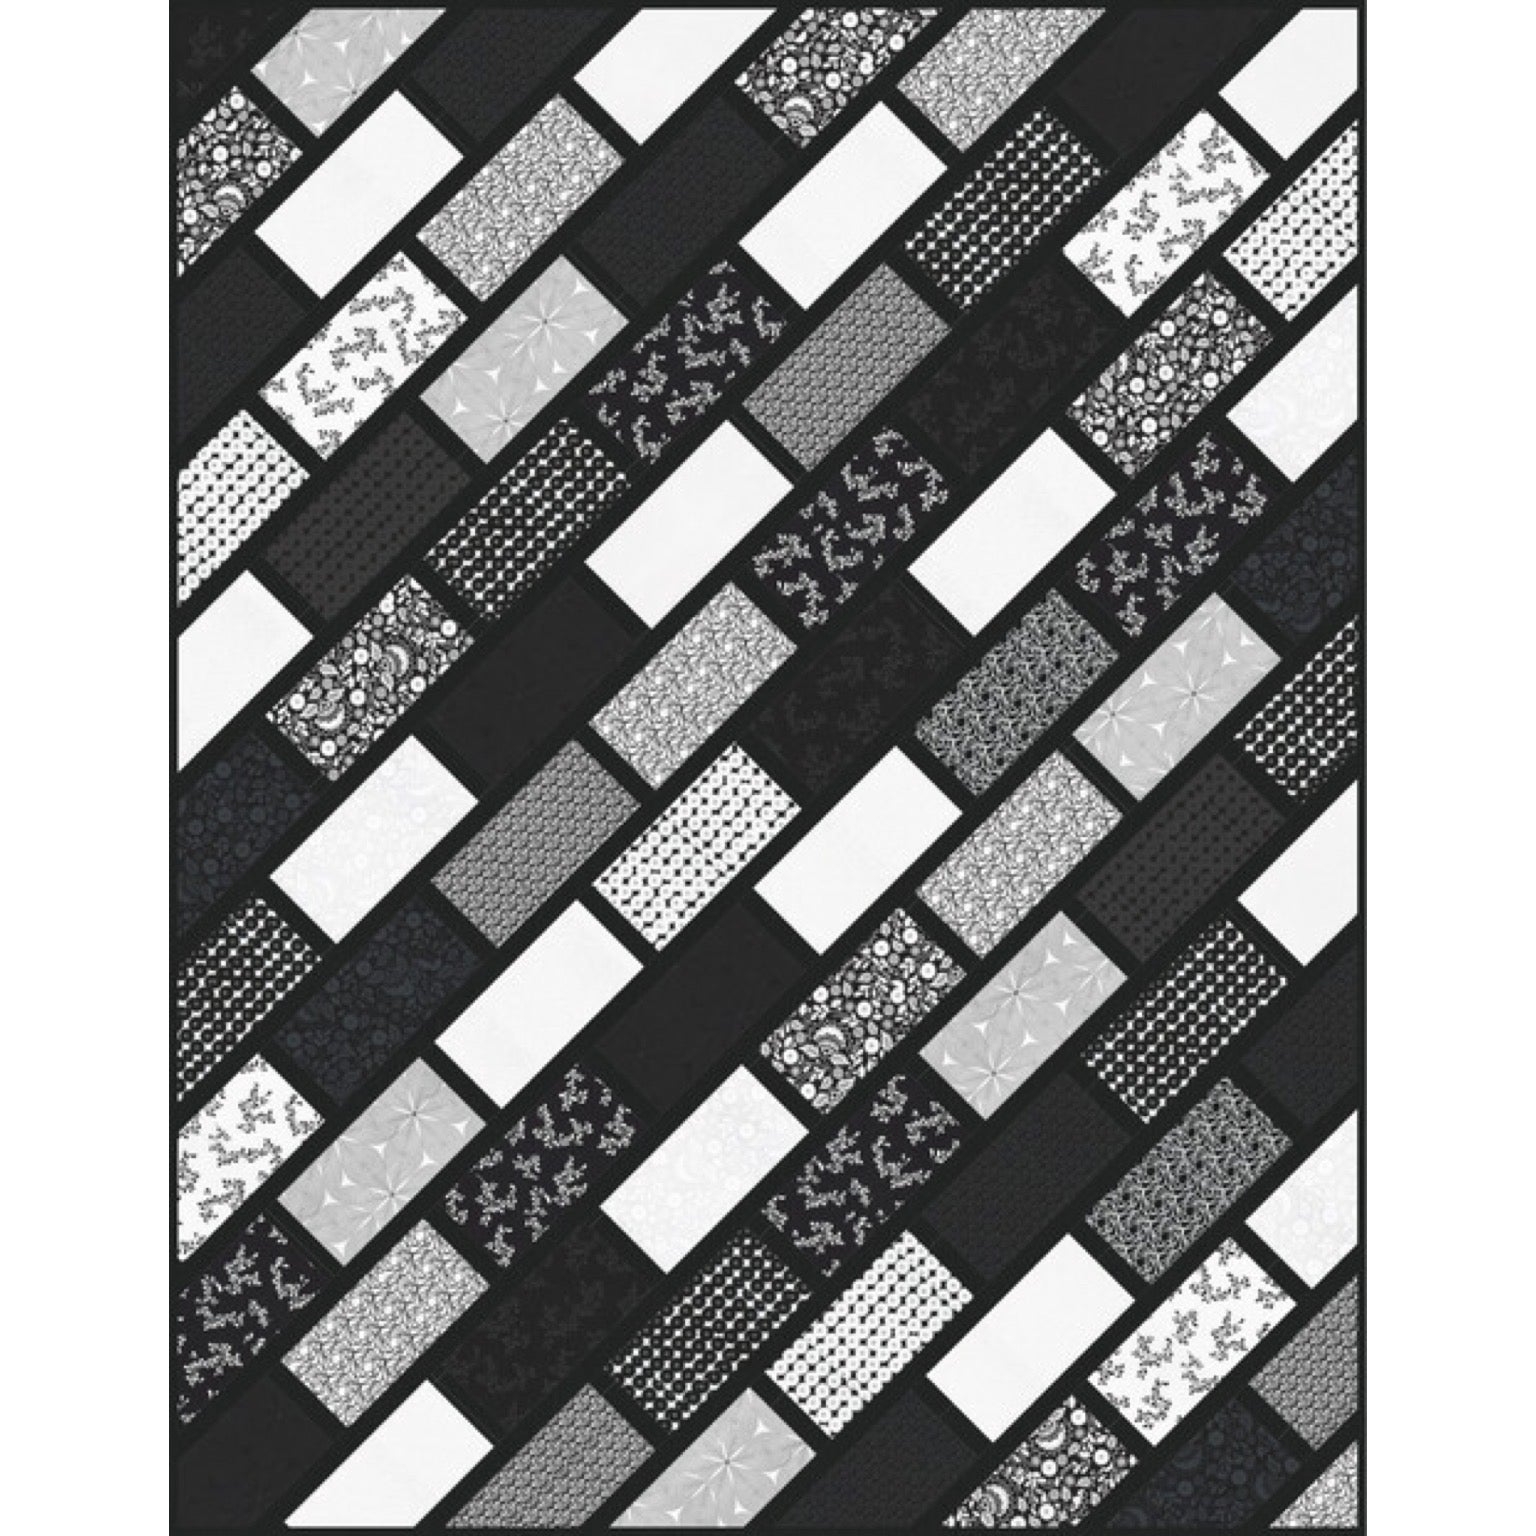 Burst of Color Free Pattern: Robert Kaufman Fabric Company